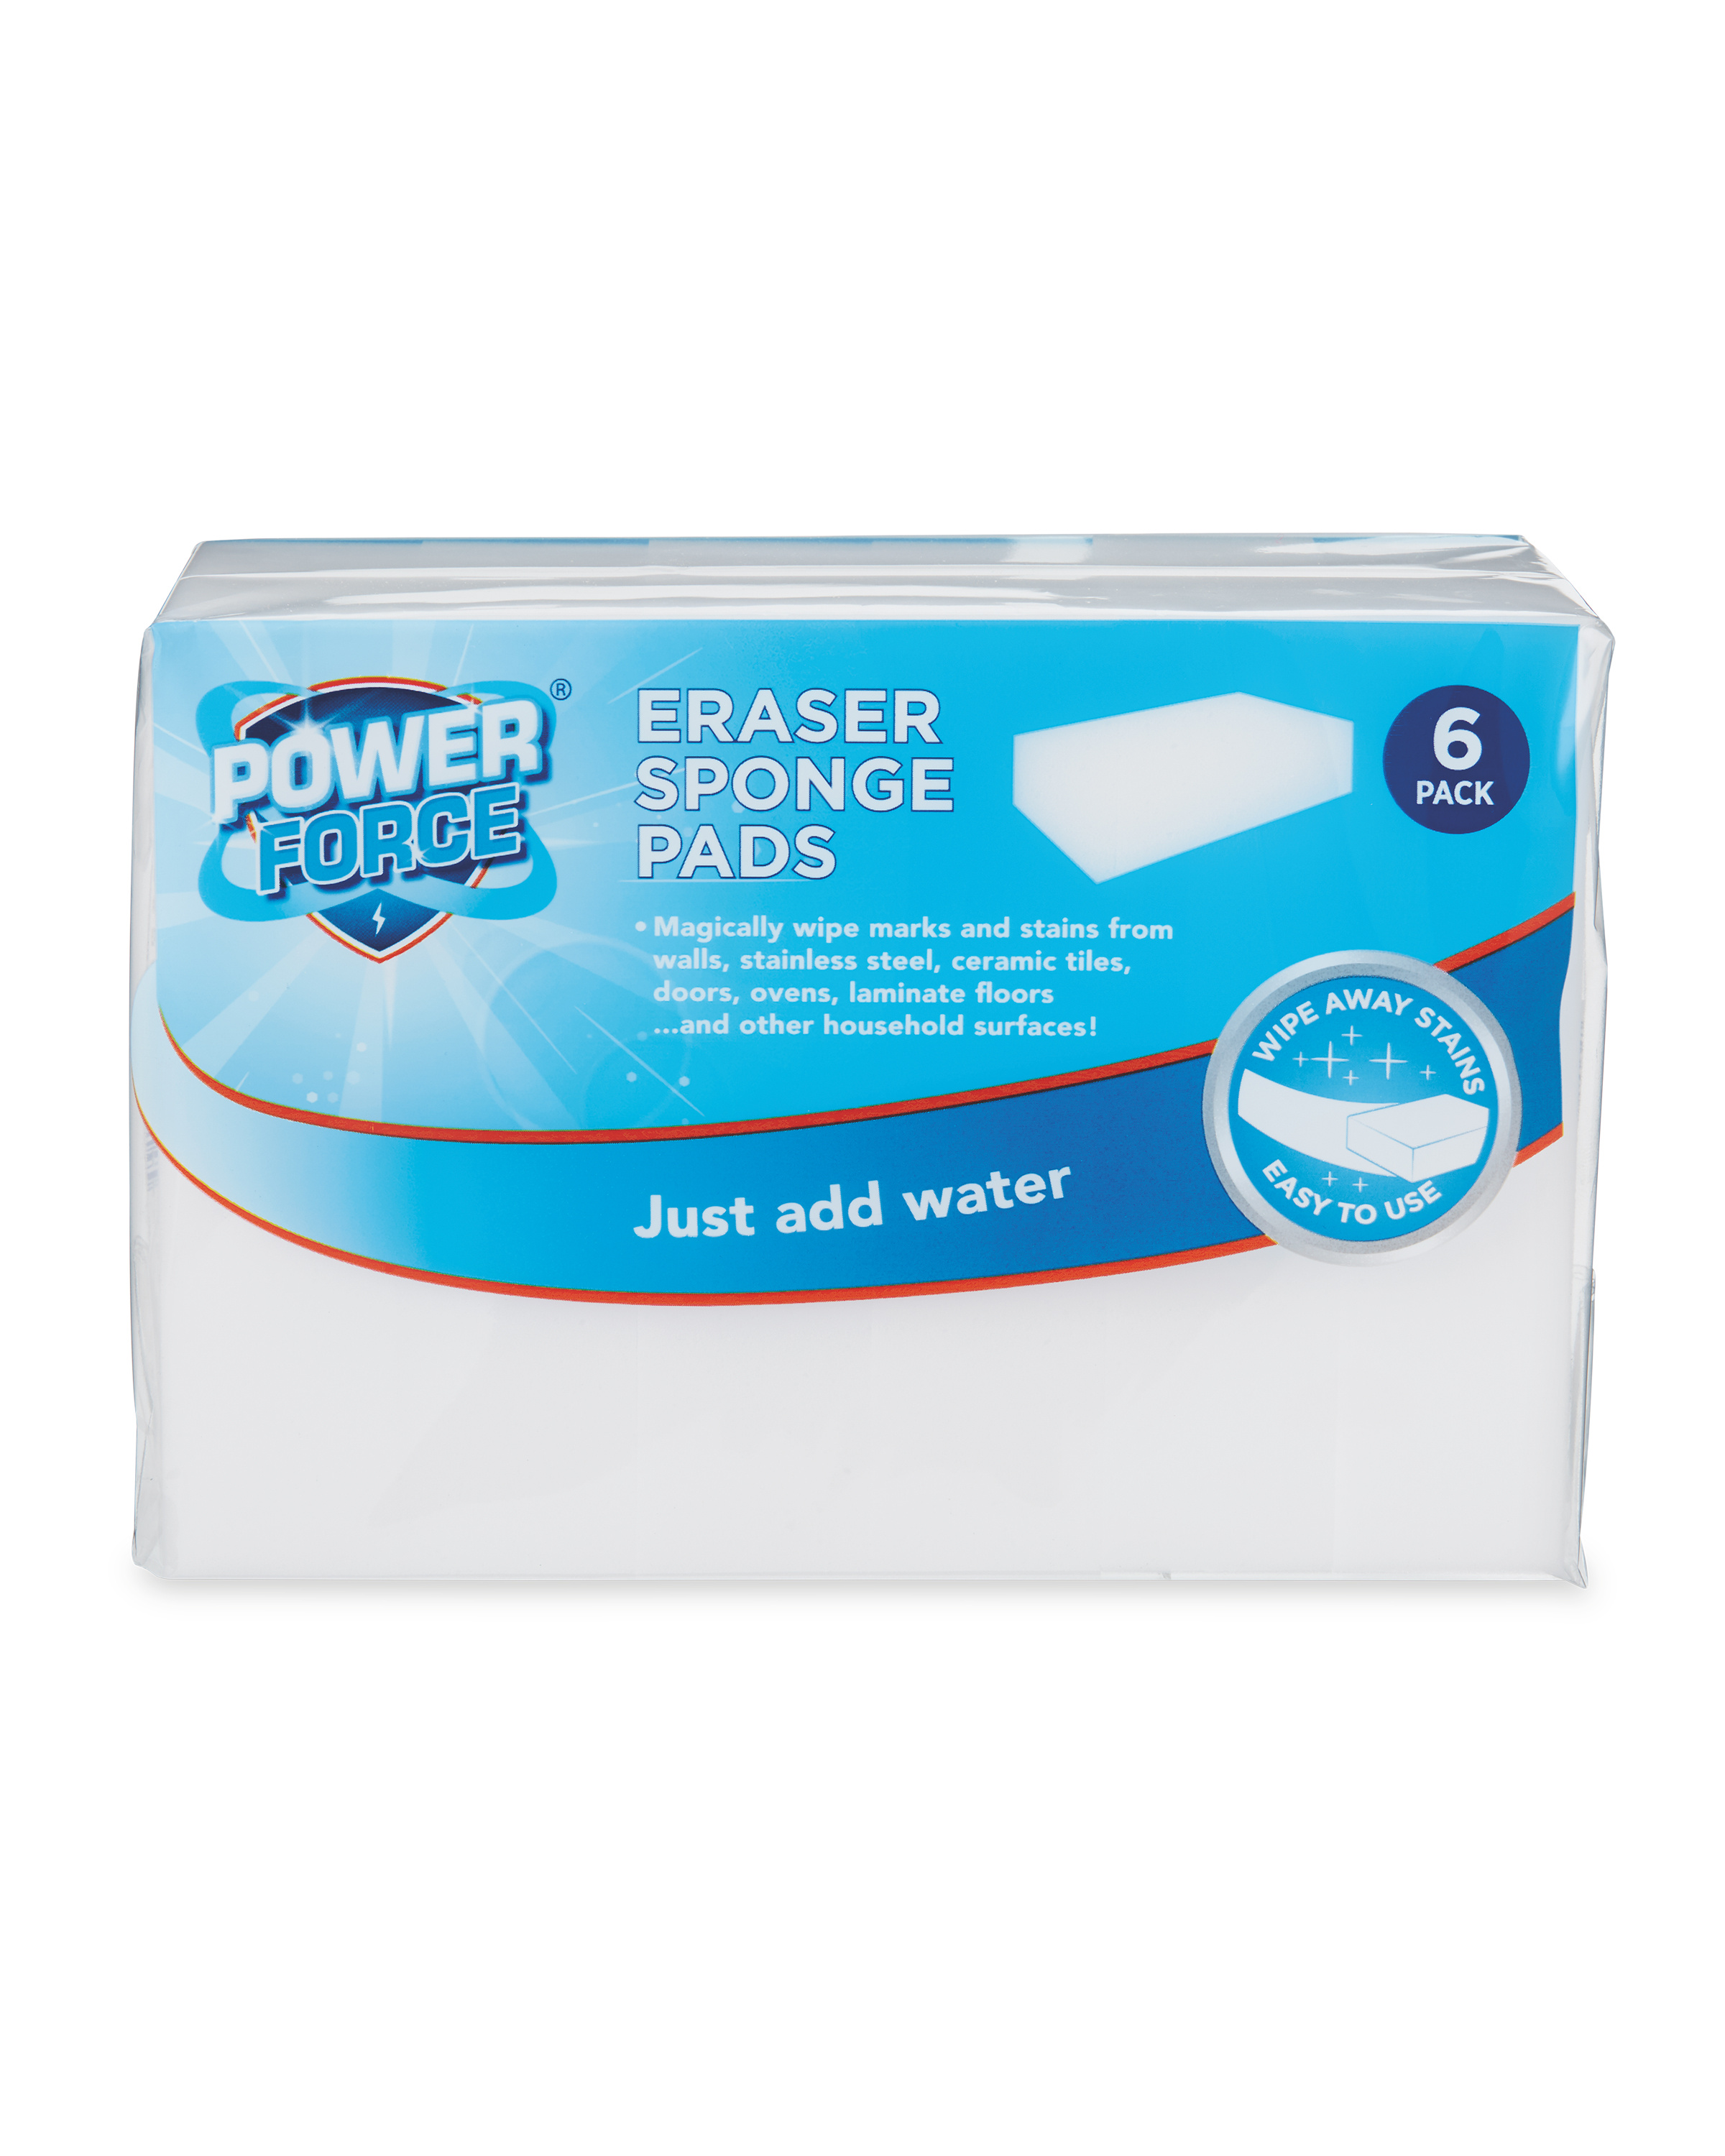 Eraser Sponge Pads 6 Pack Aldi Uk